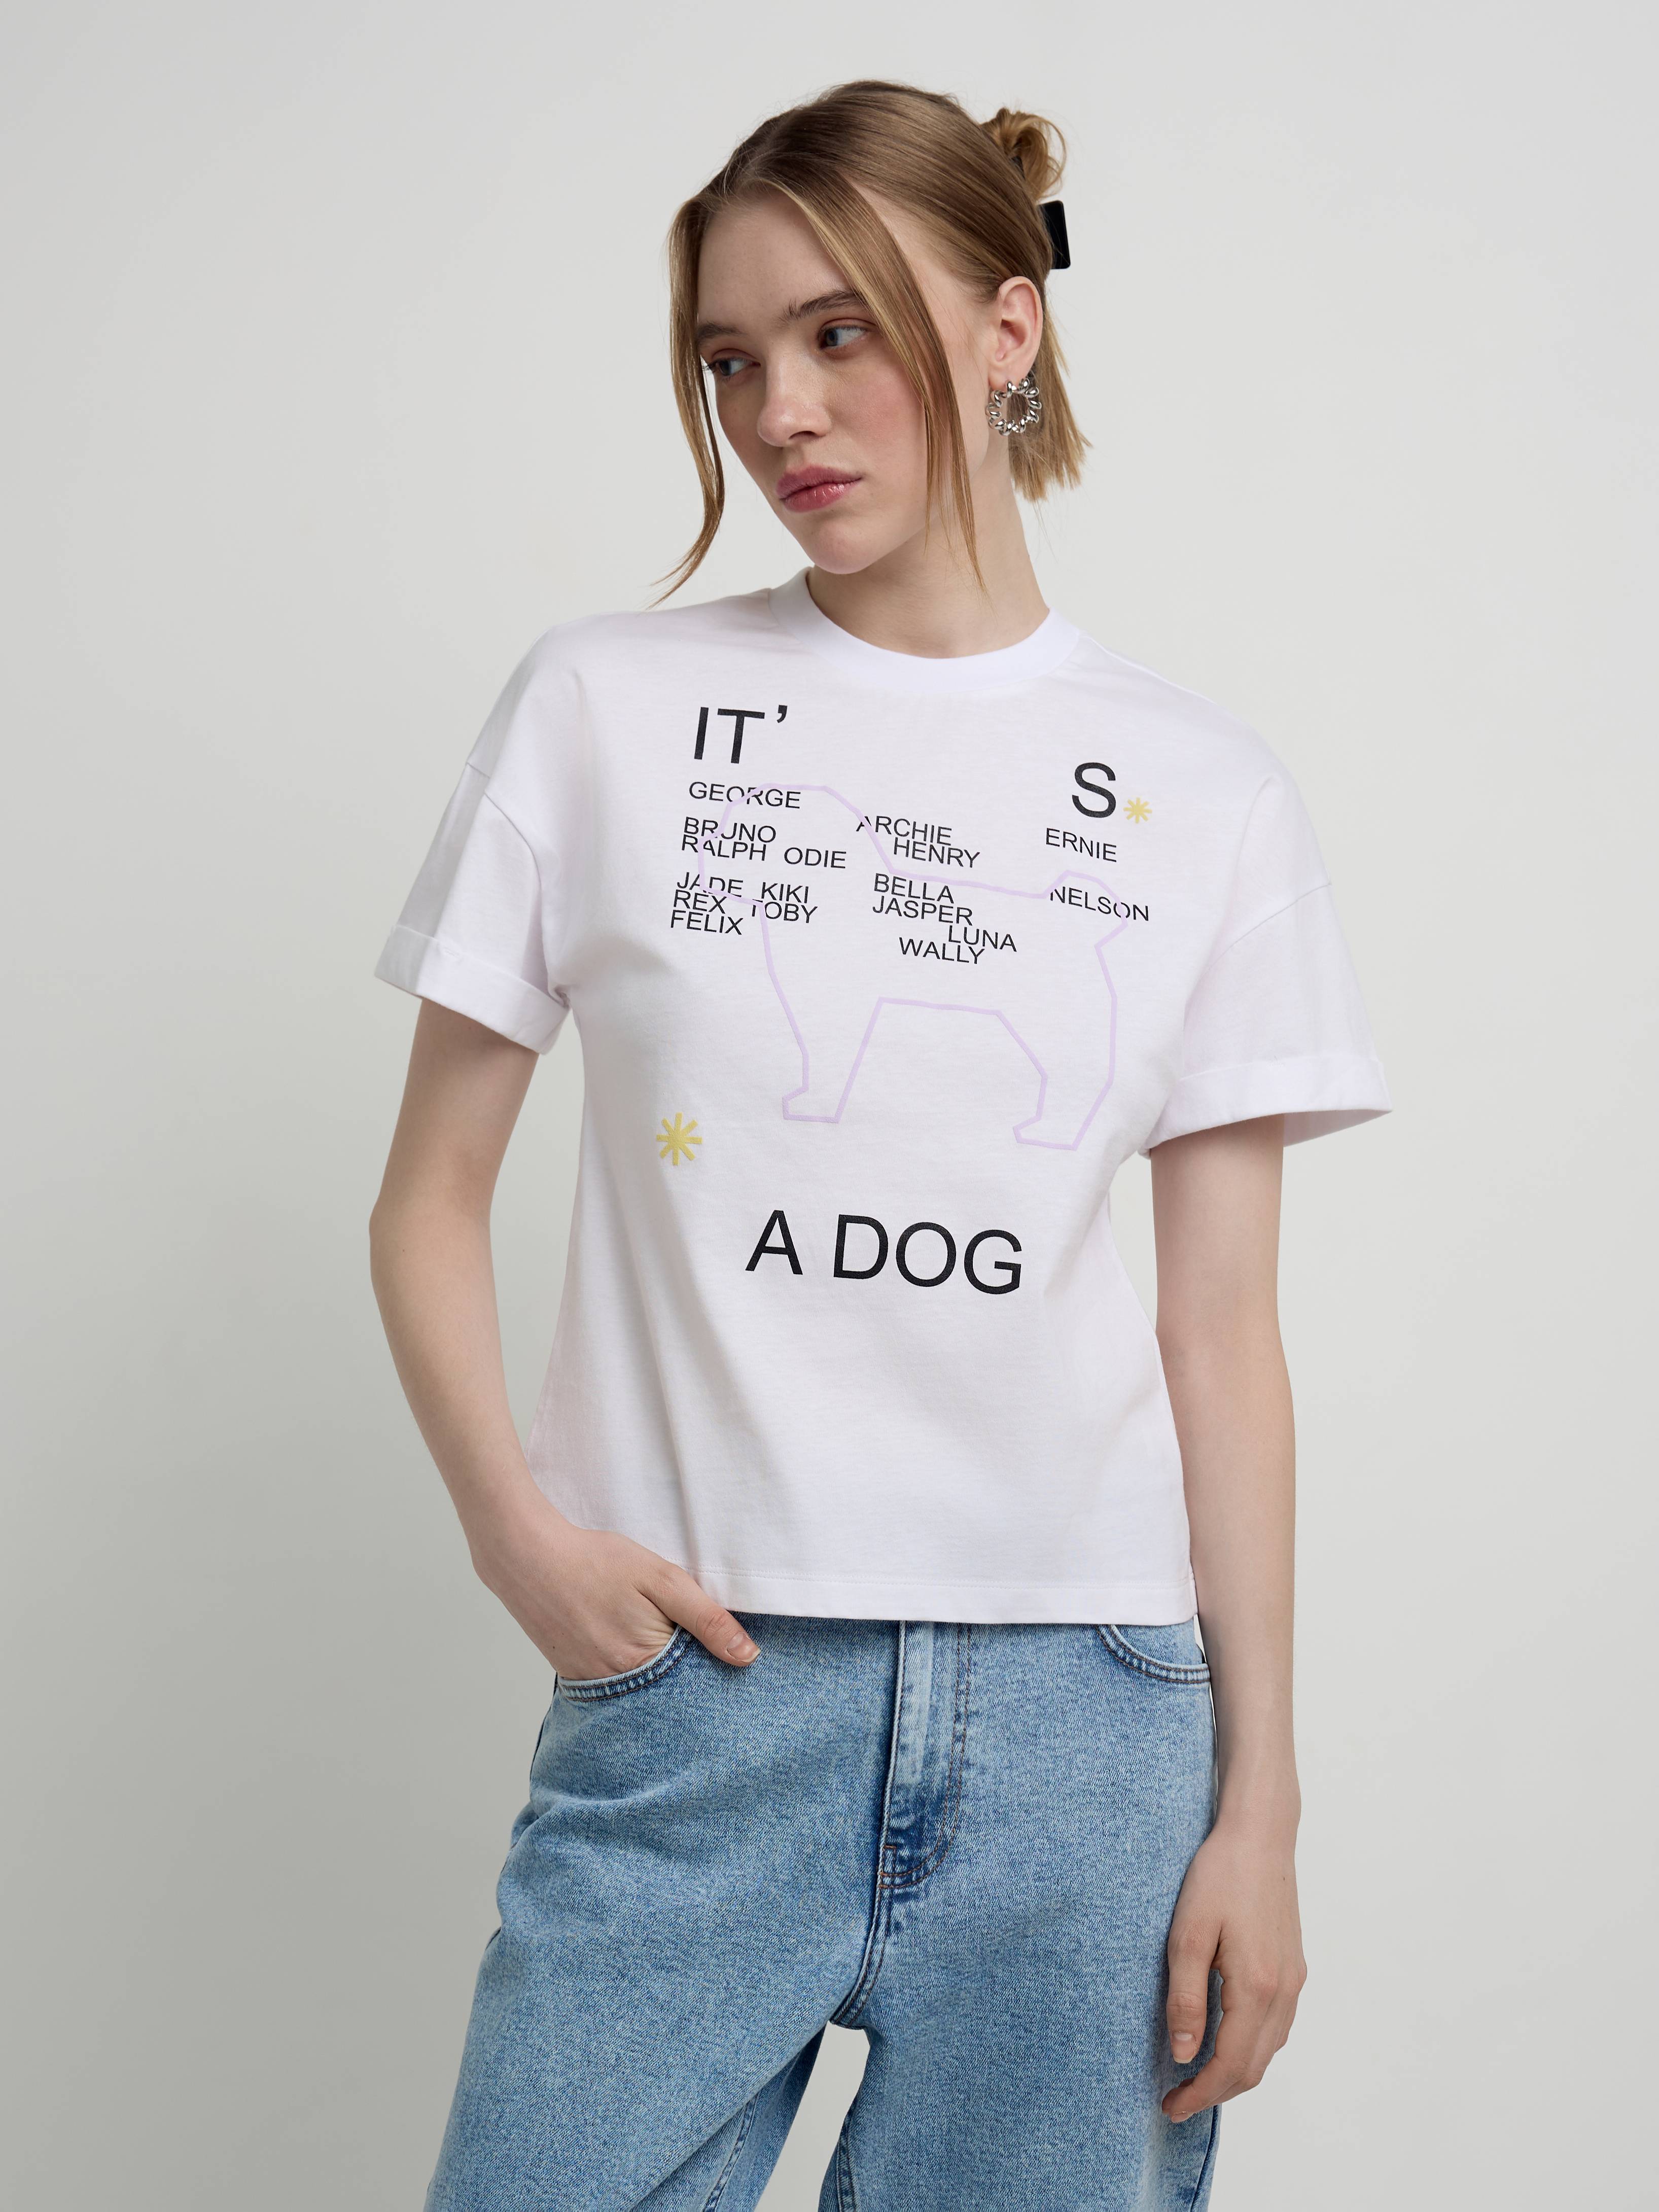 Свободная футболка с манжетами и рисунком «It’s a dog» LD 2113 Conte ⭐️, цвет white, размер 170-100/xl